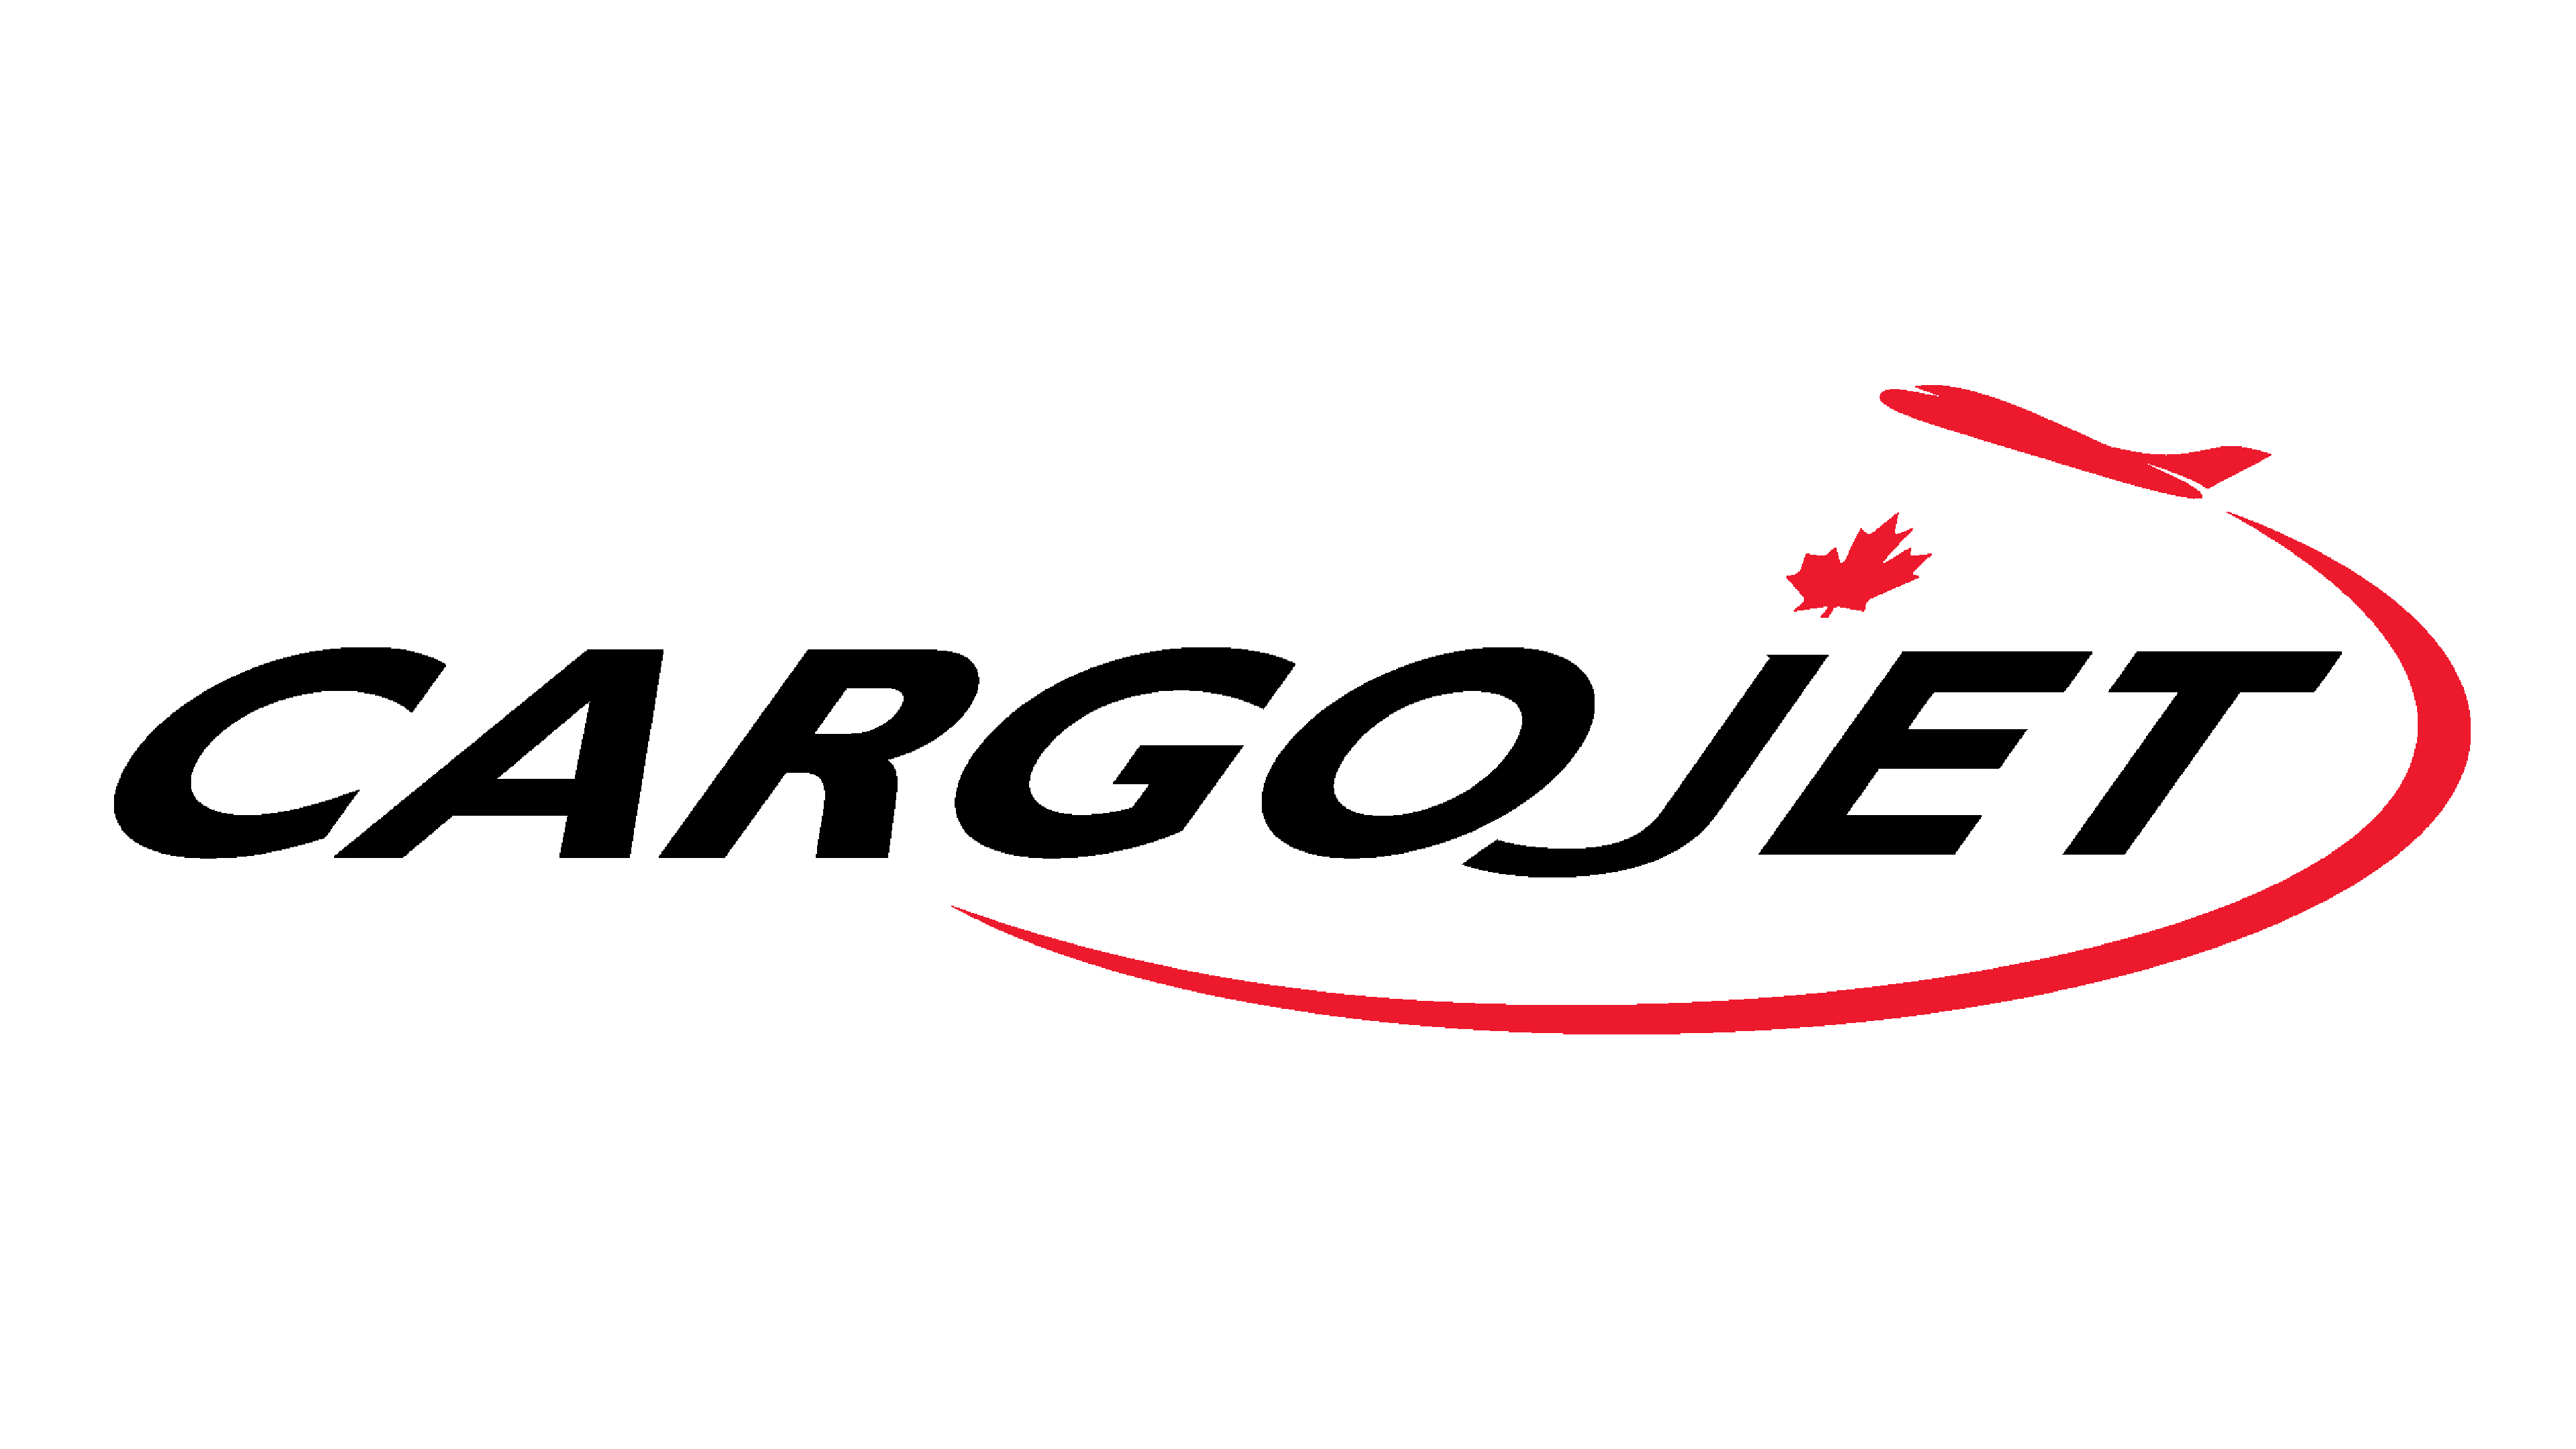 Logotipo de Cargojet Logo